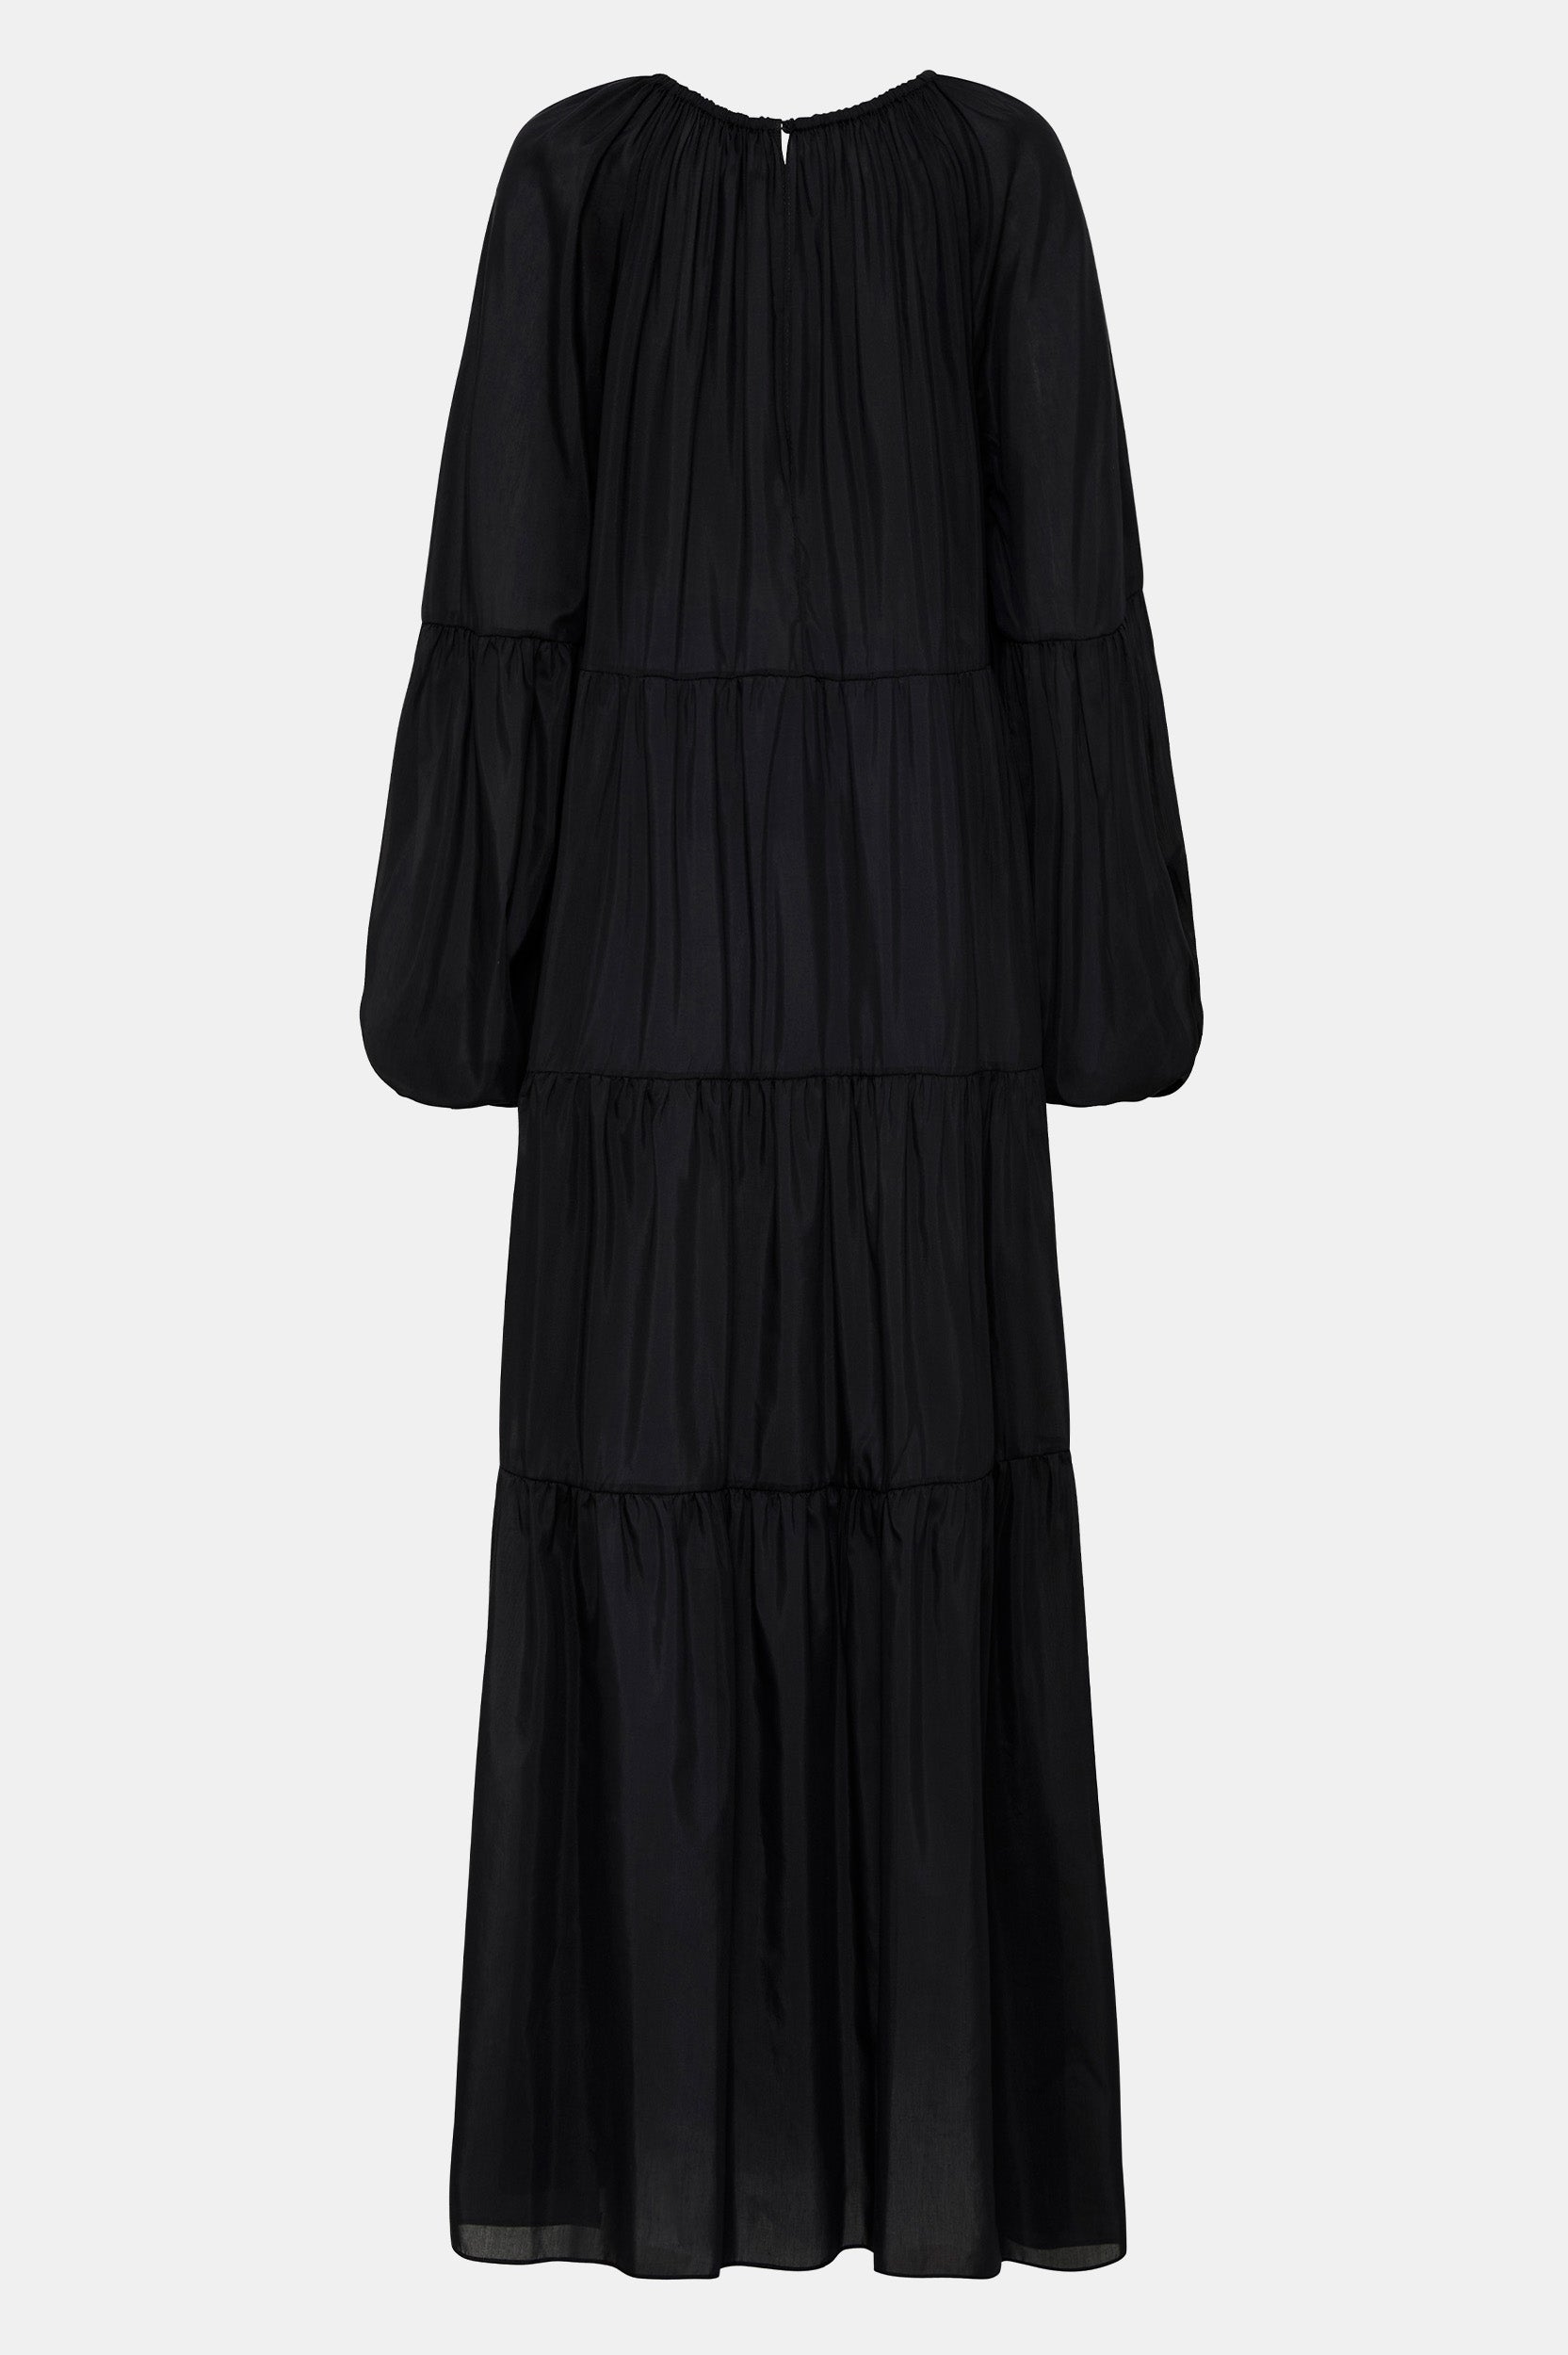 Voluminous Tiered Dress in Black